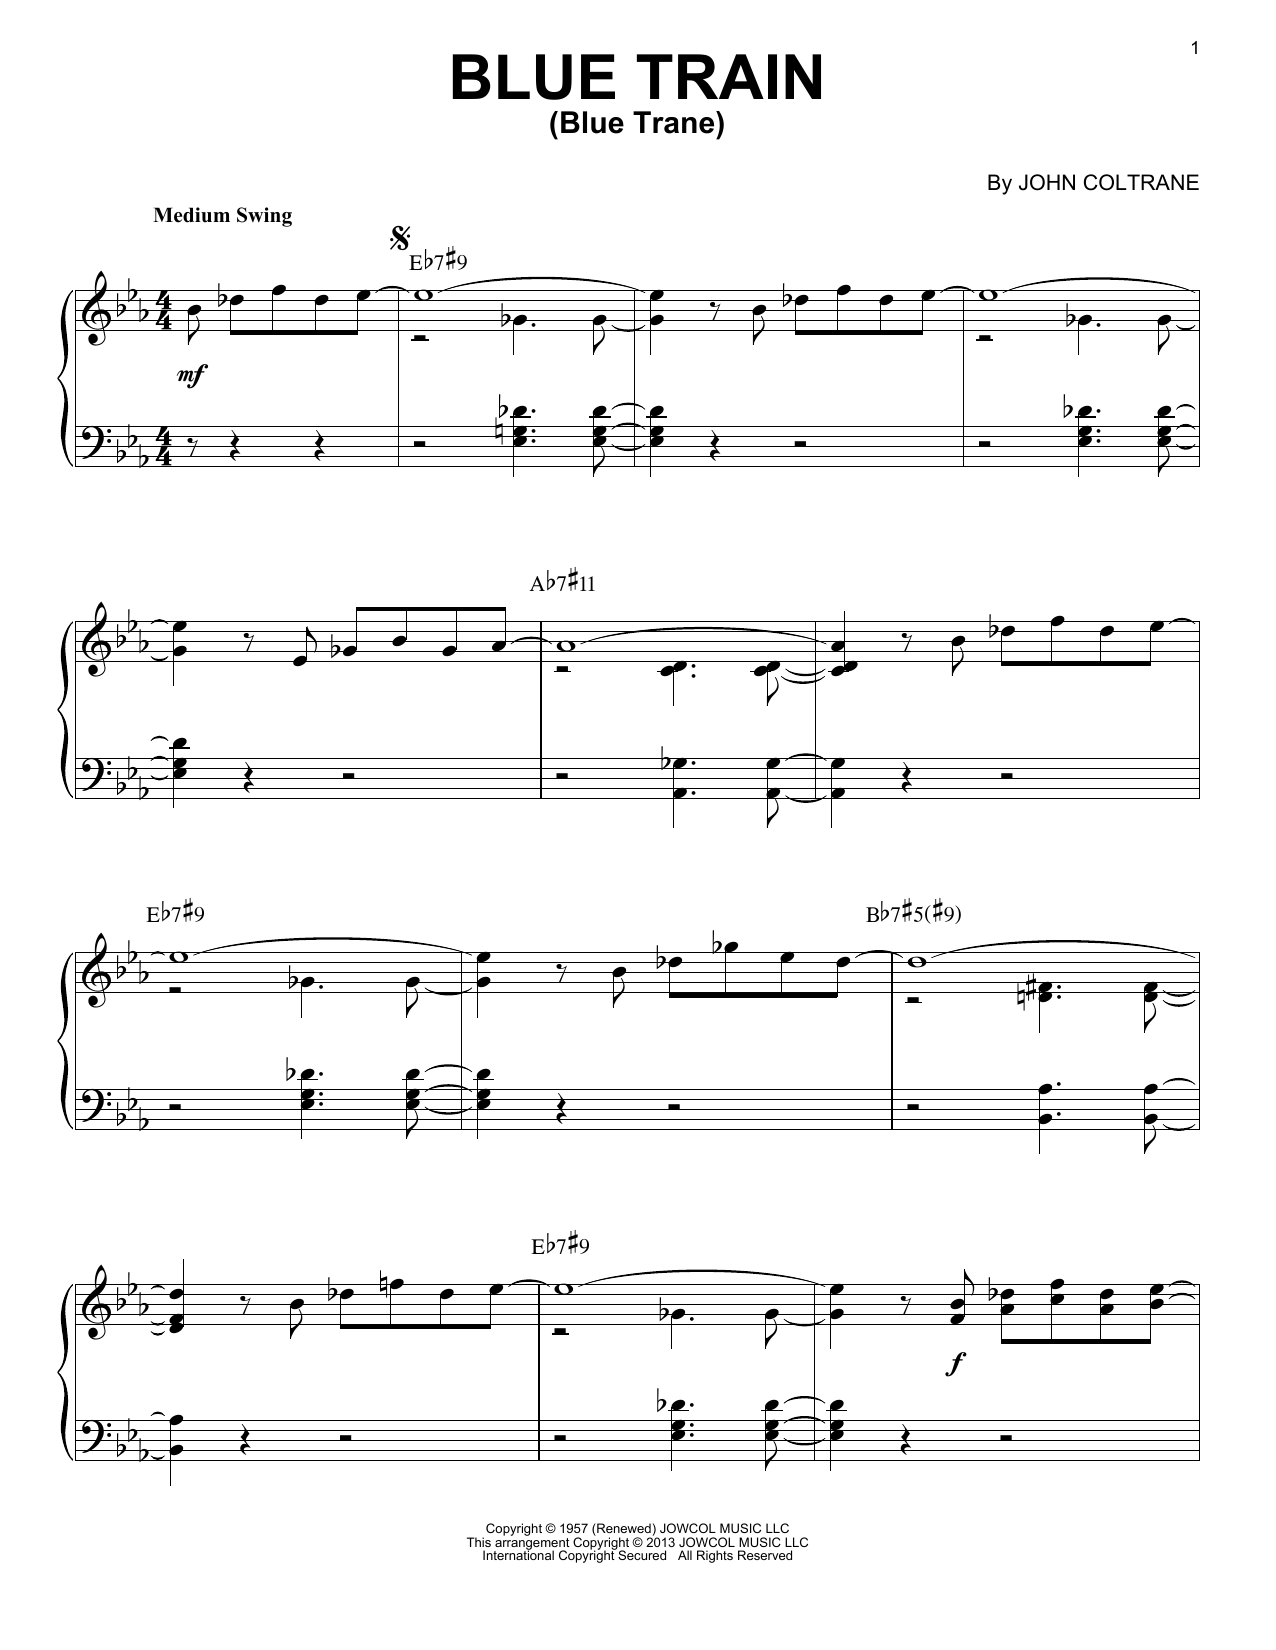 John Coltrane Blue Train (Blue Trane) (arr. Brent Edstrom) Sheet Music Notes & Chords for Piano Solo - Download or Print PDF